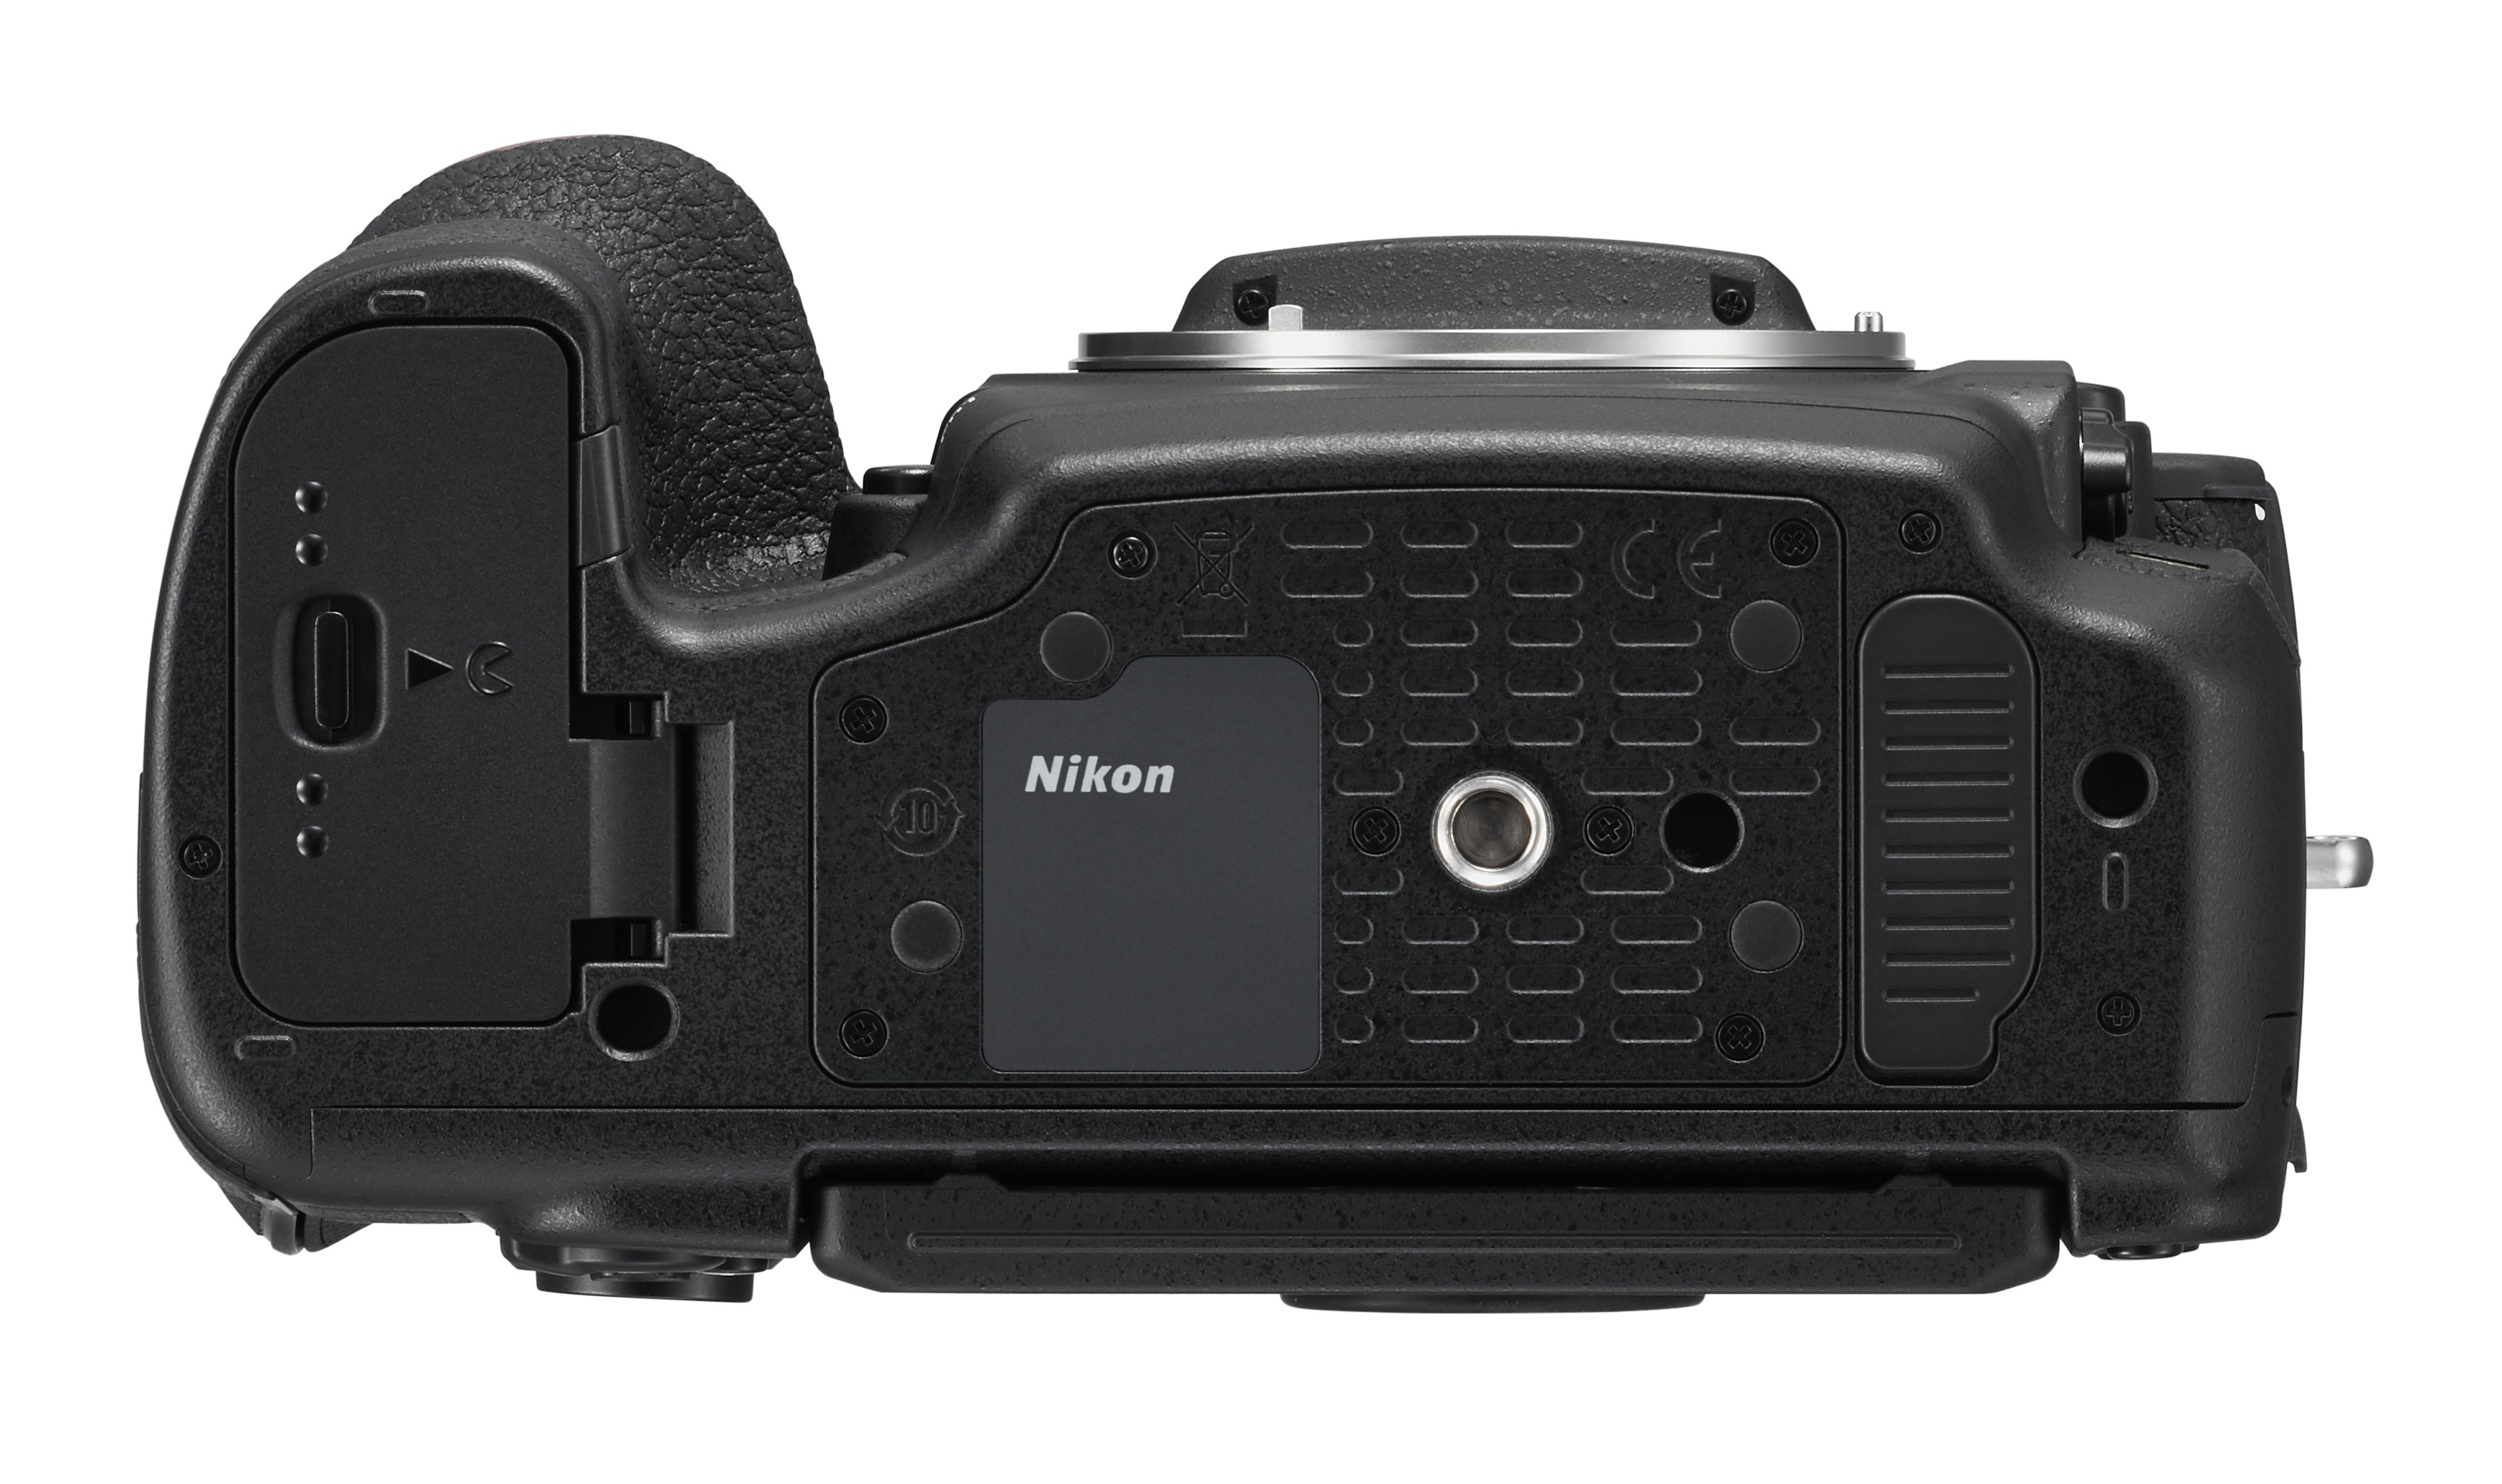 Spiegelreflexkamera, Objektiv 45,7 NIKON Schwarz Touchscreen Megapixel, Display, 24-120 VC), Kit ED, D850 WLAN, (AF-S, mm